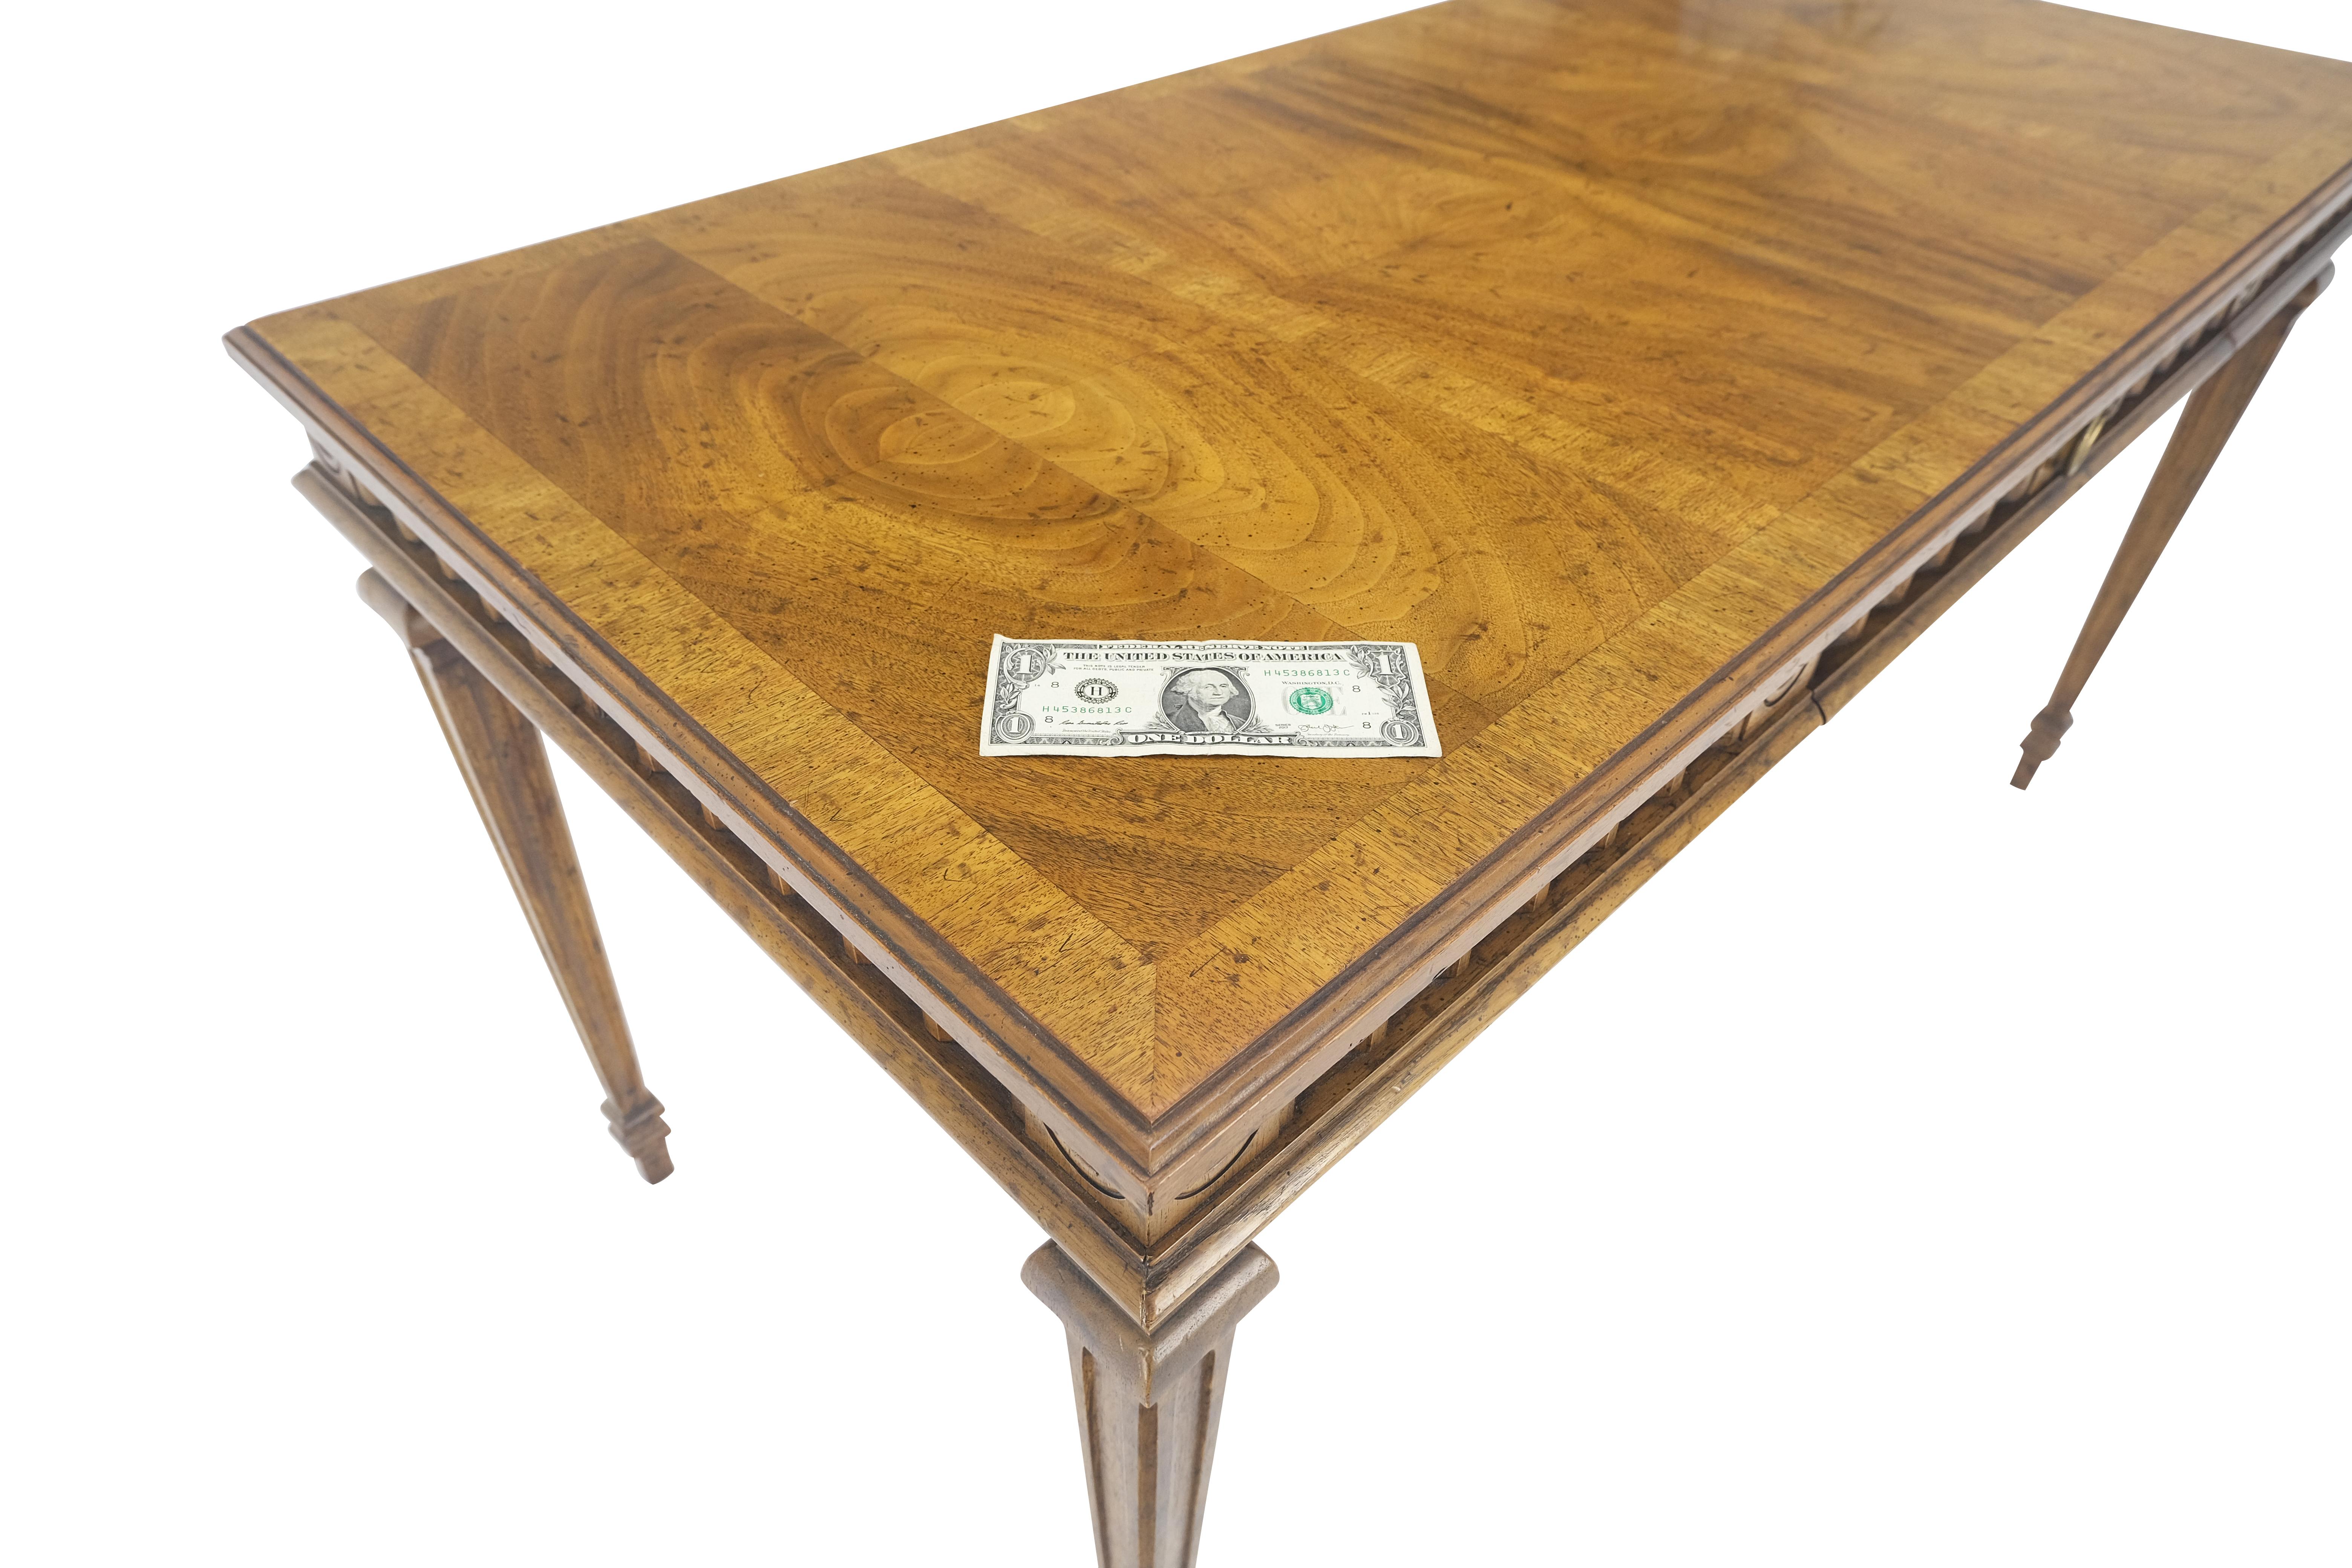 Heritage Henredon Scalloped Edge Olive Burl Wood Top Desk One Drawer Table MINT! For Sale 1